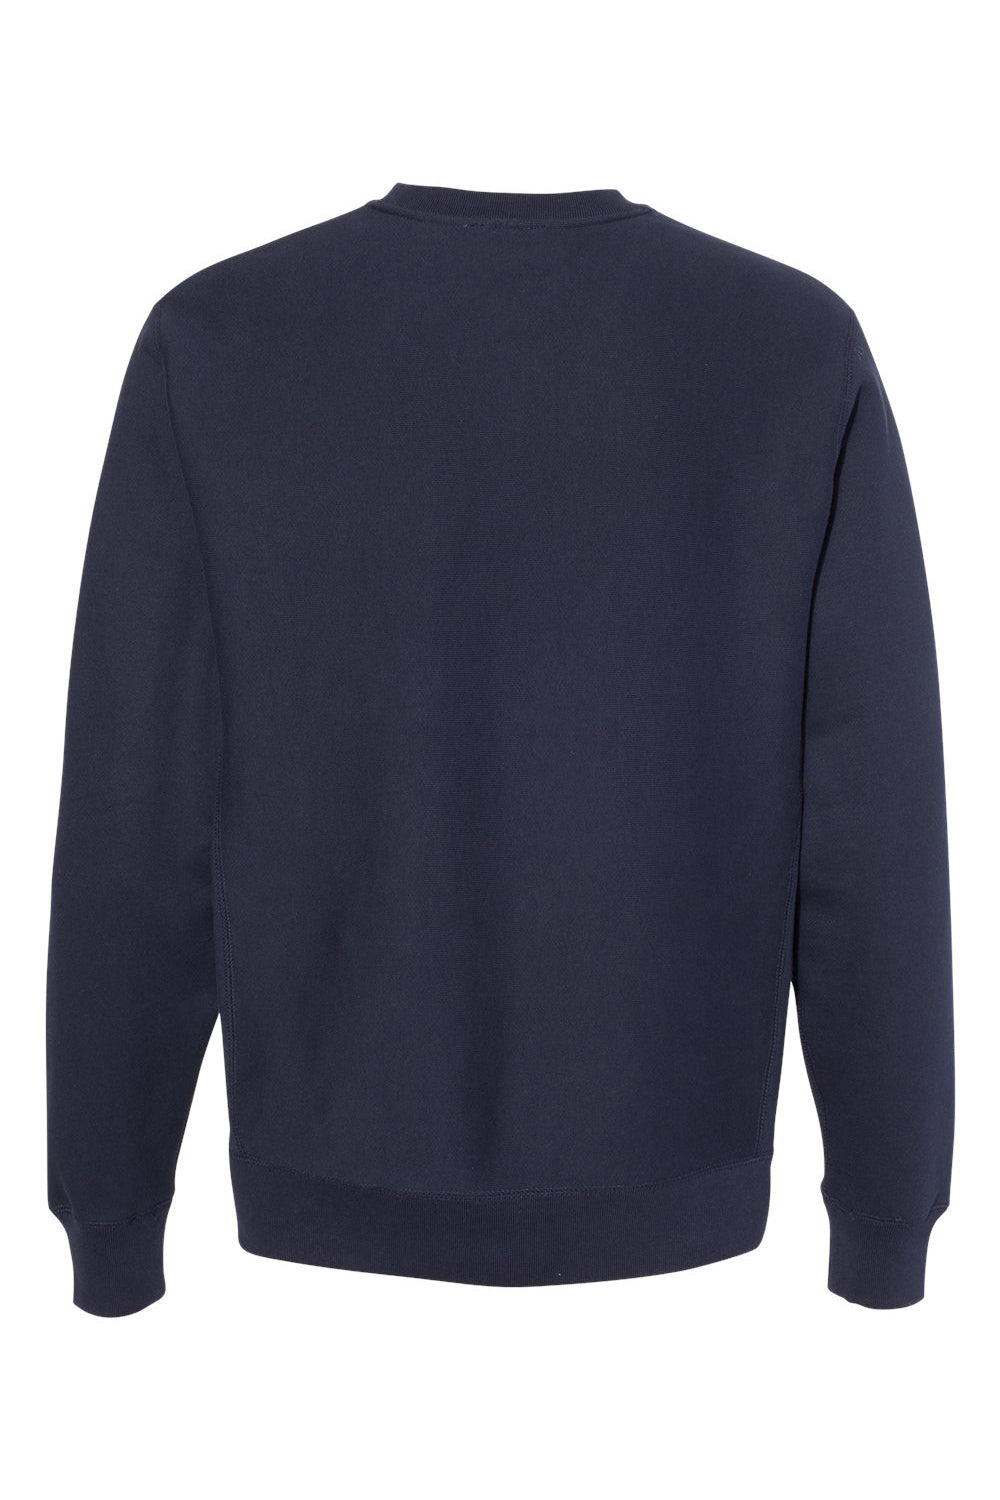 Independent Trading Co. IND5000C Mens Legend Crewneck Sweatshirt Classic Navy Blue Flat Back